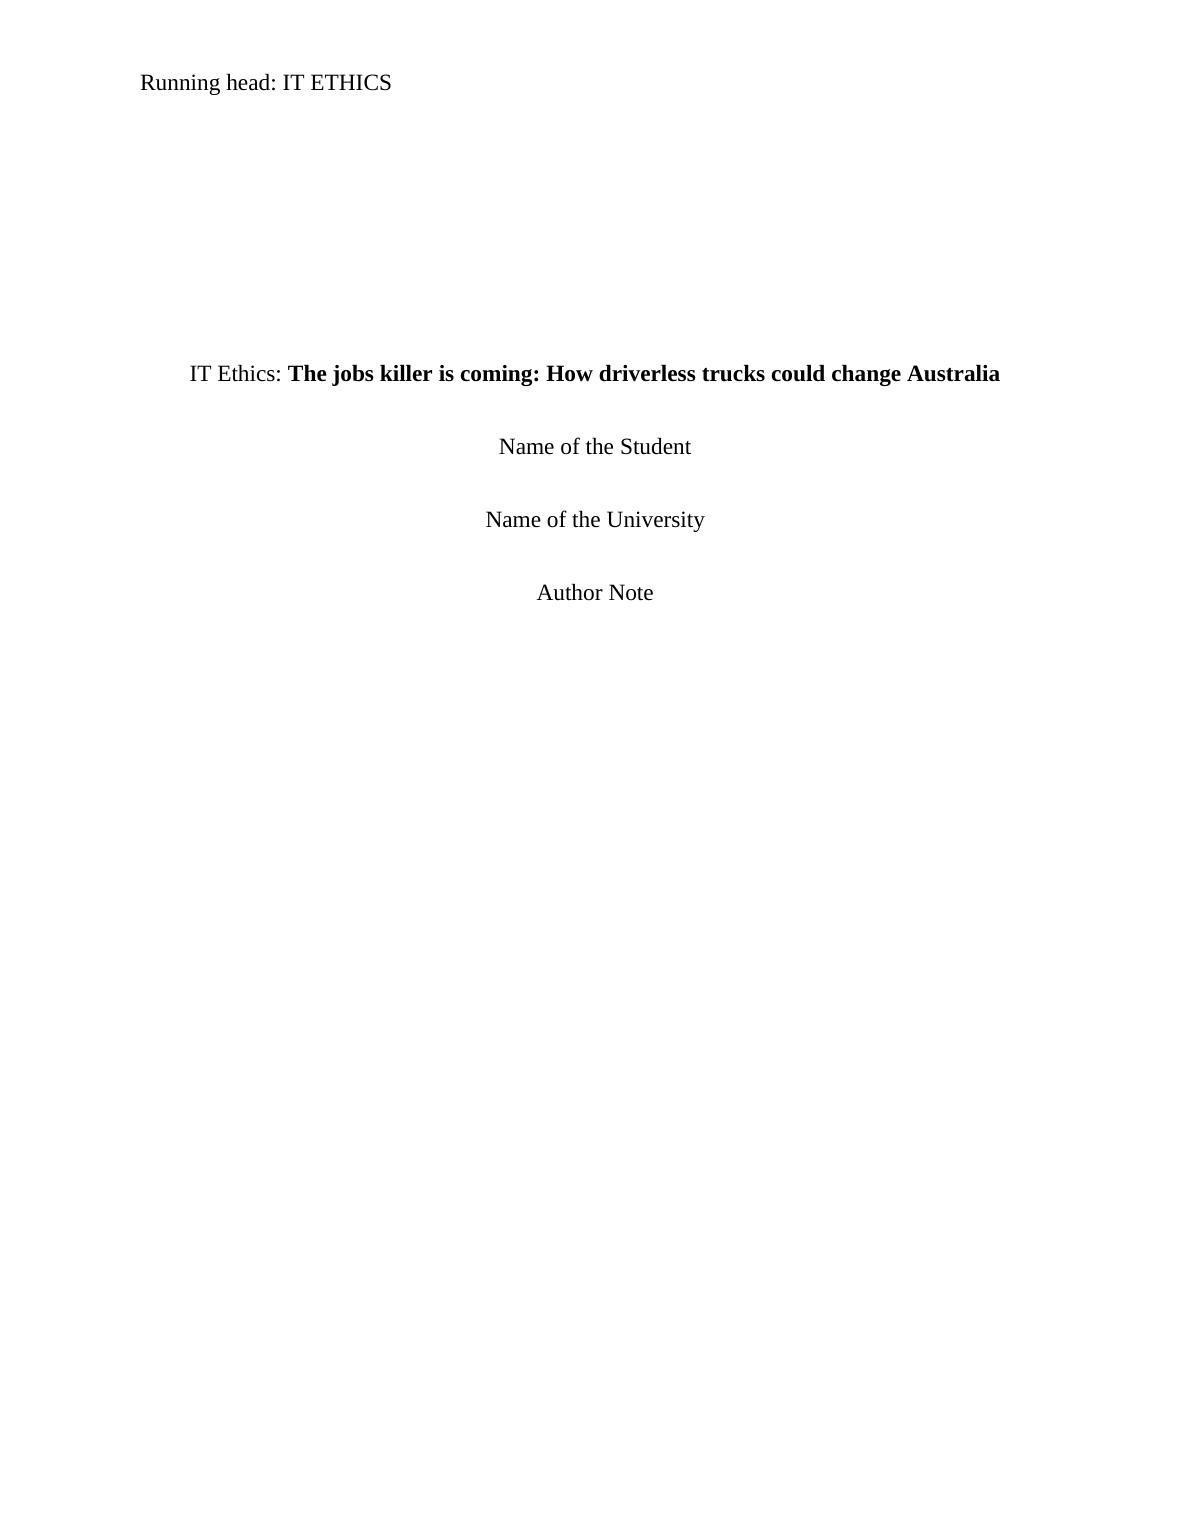 IT Ethics  -  Assignment PDF_1